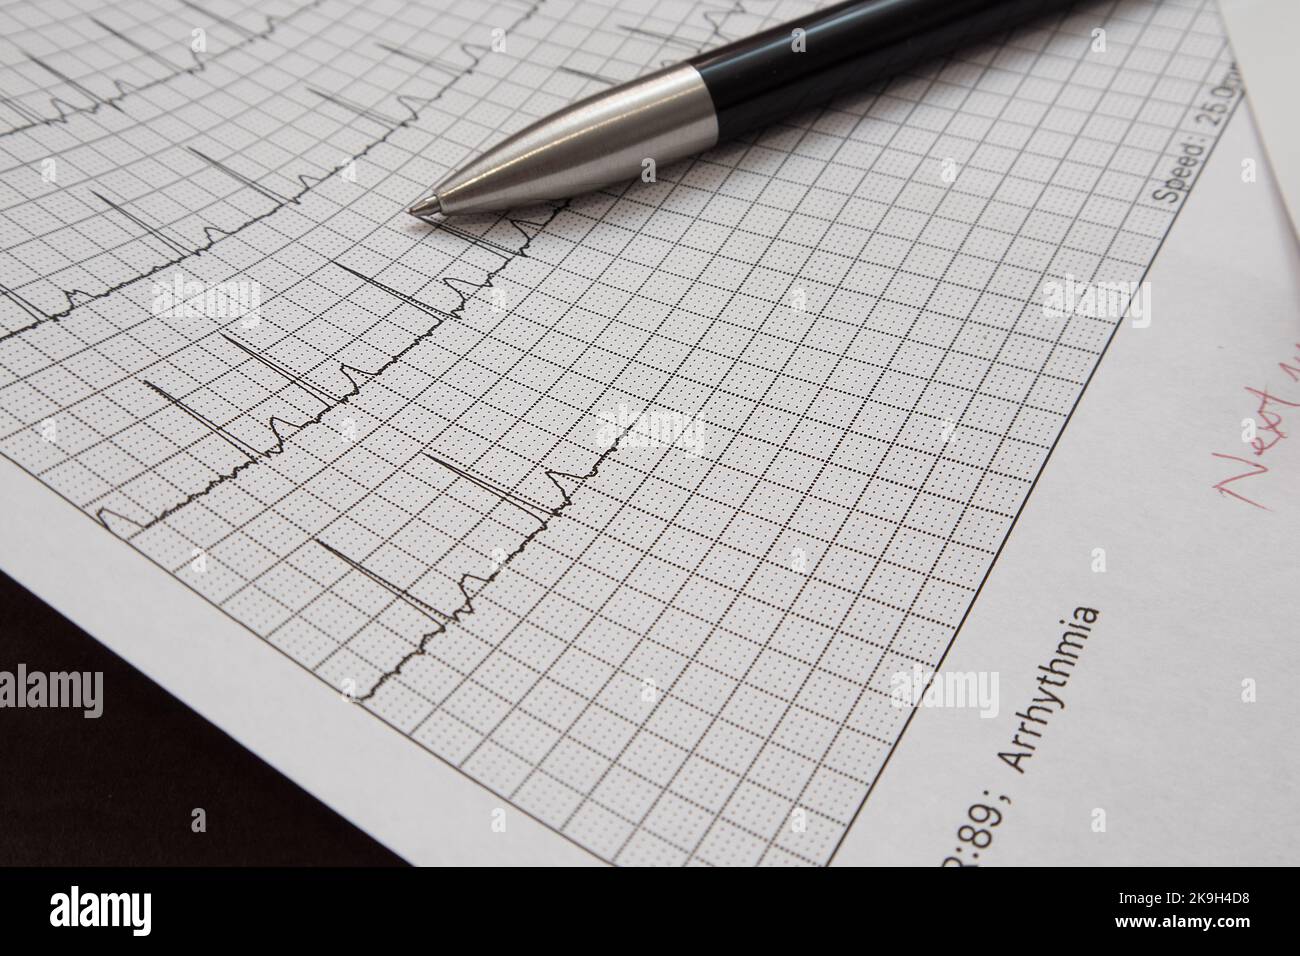 Electrocardiogram (ECG or EKG) presenting possible arrhythmia. Stock Photo